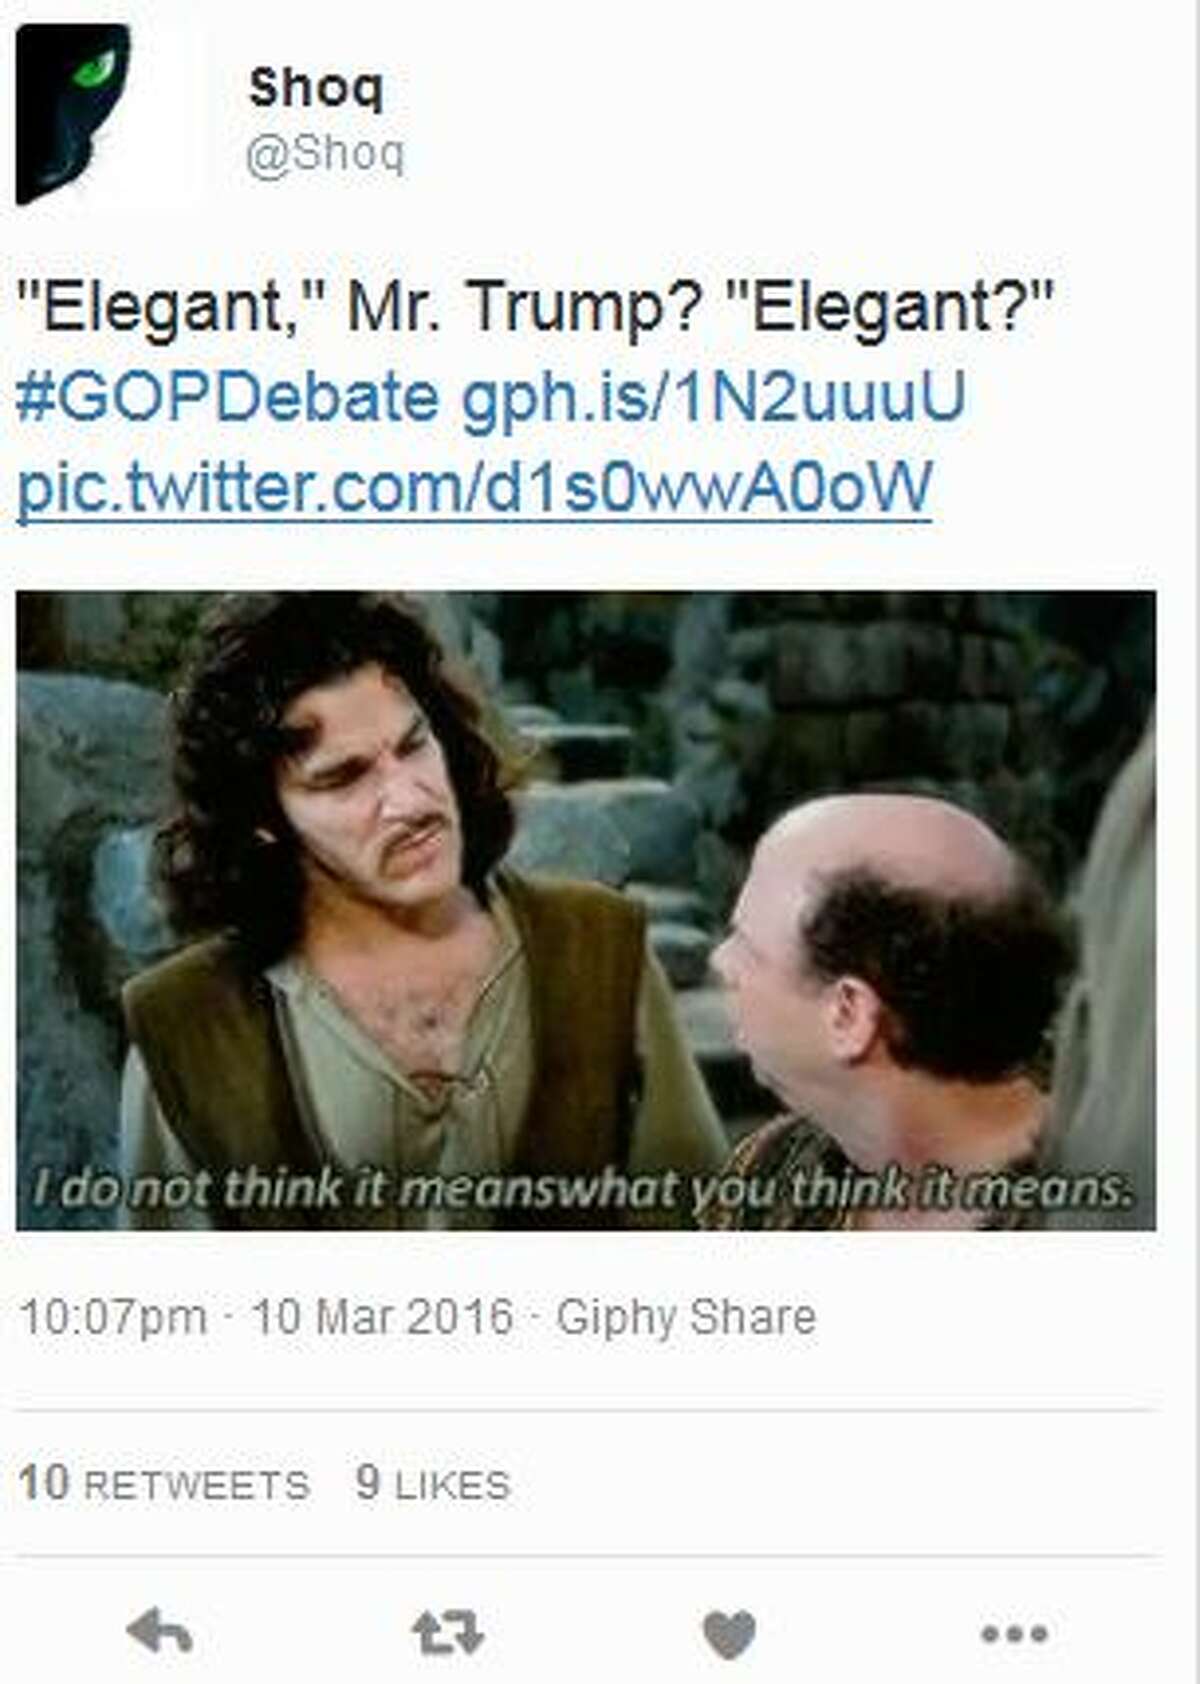 @Shoq: "Elegant" Mr. Trump? "Elegant?" #GOPDebate gph.is/1N2uuuUpic.twitter.com/d1s0wwA0ow